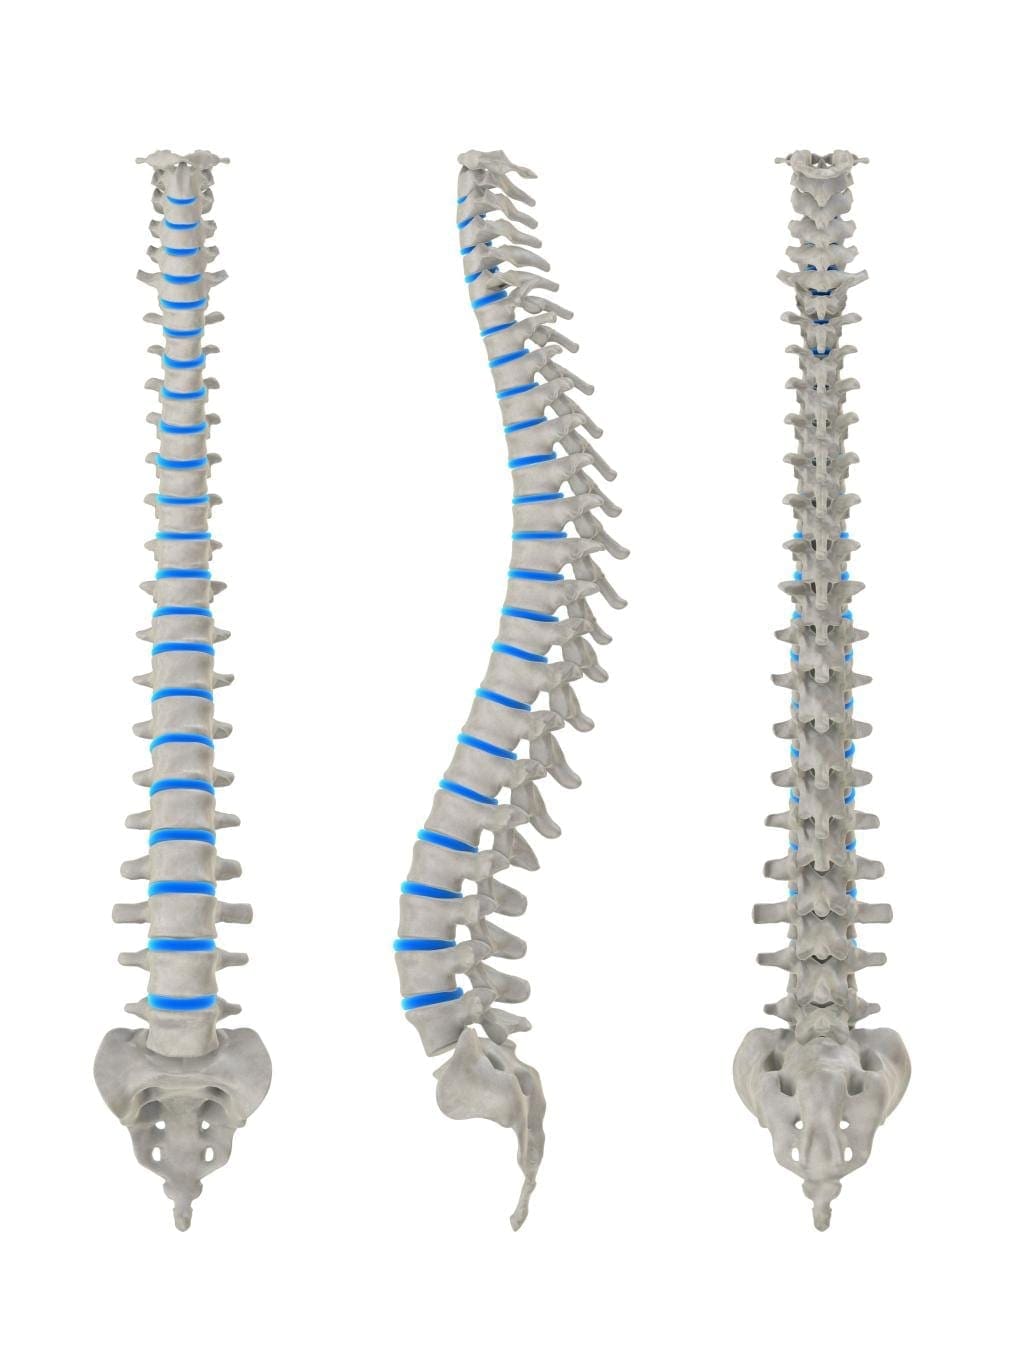 spine animation crack